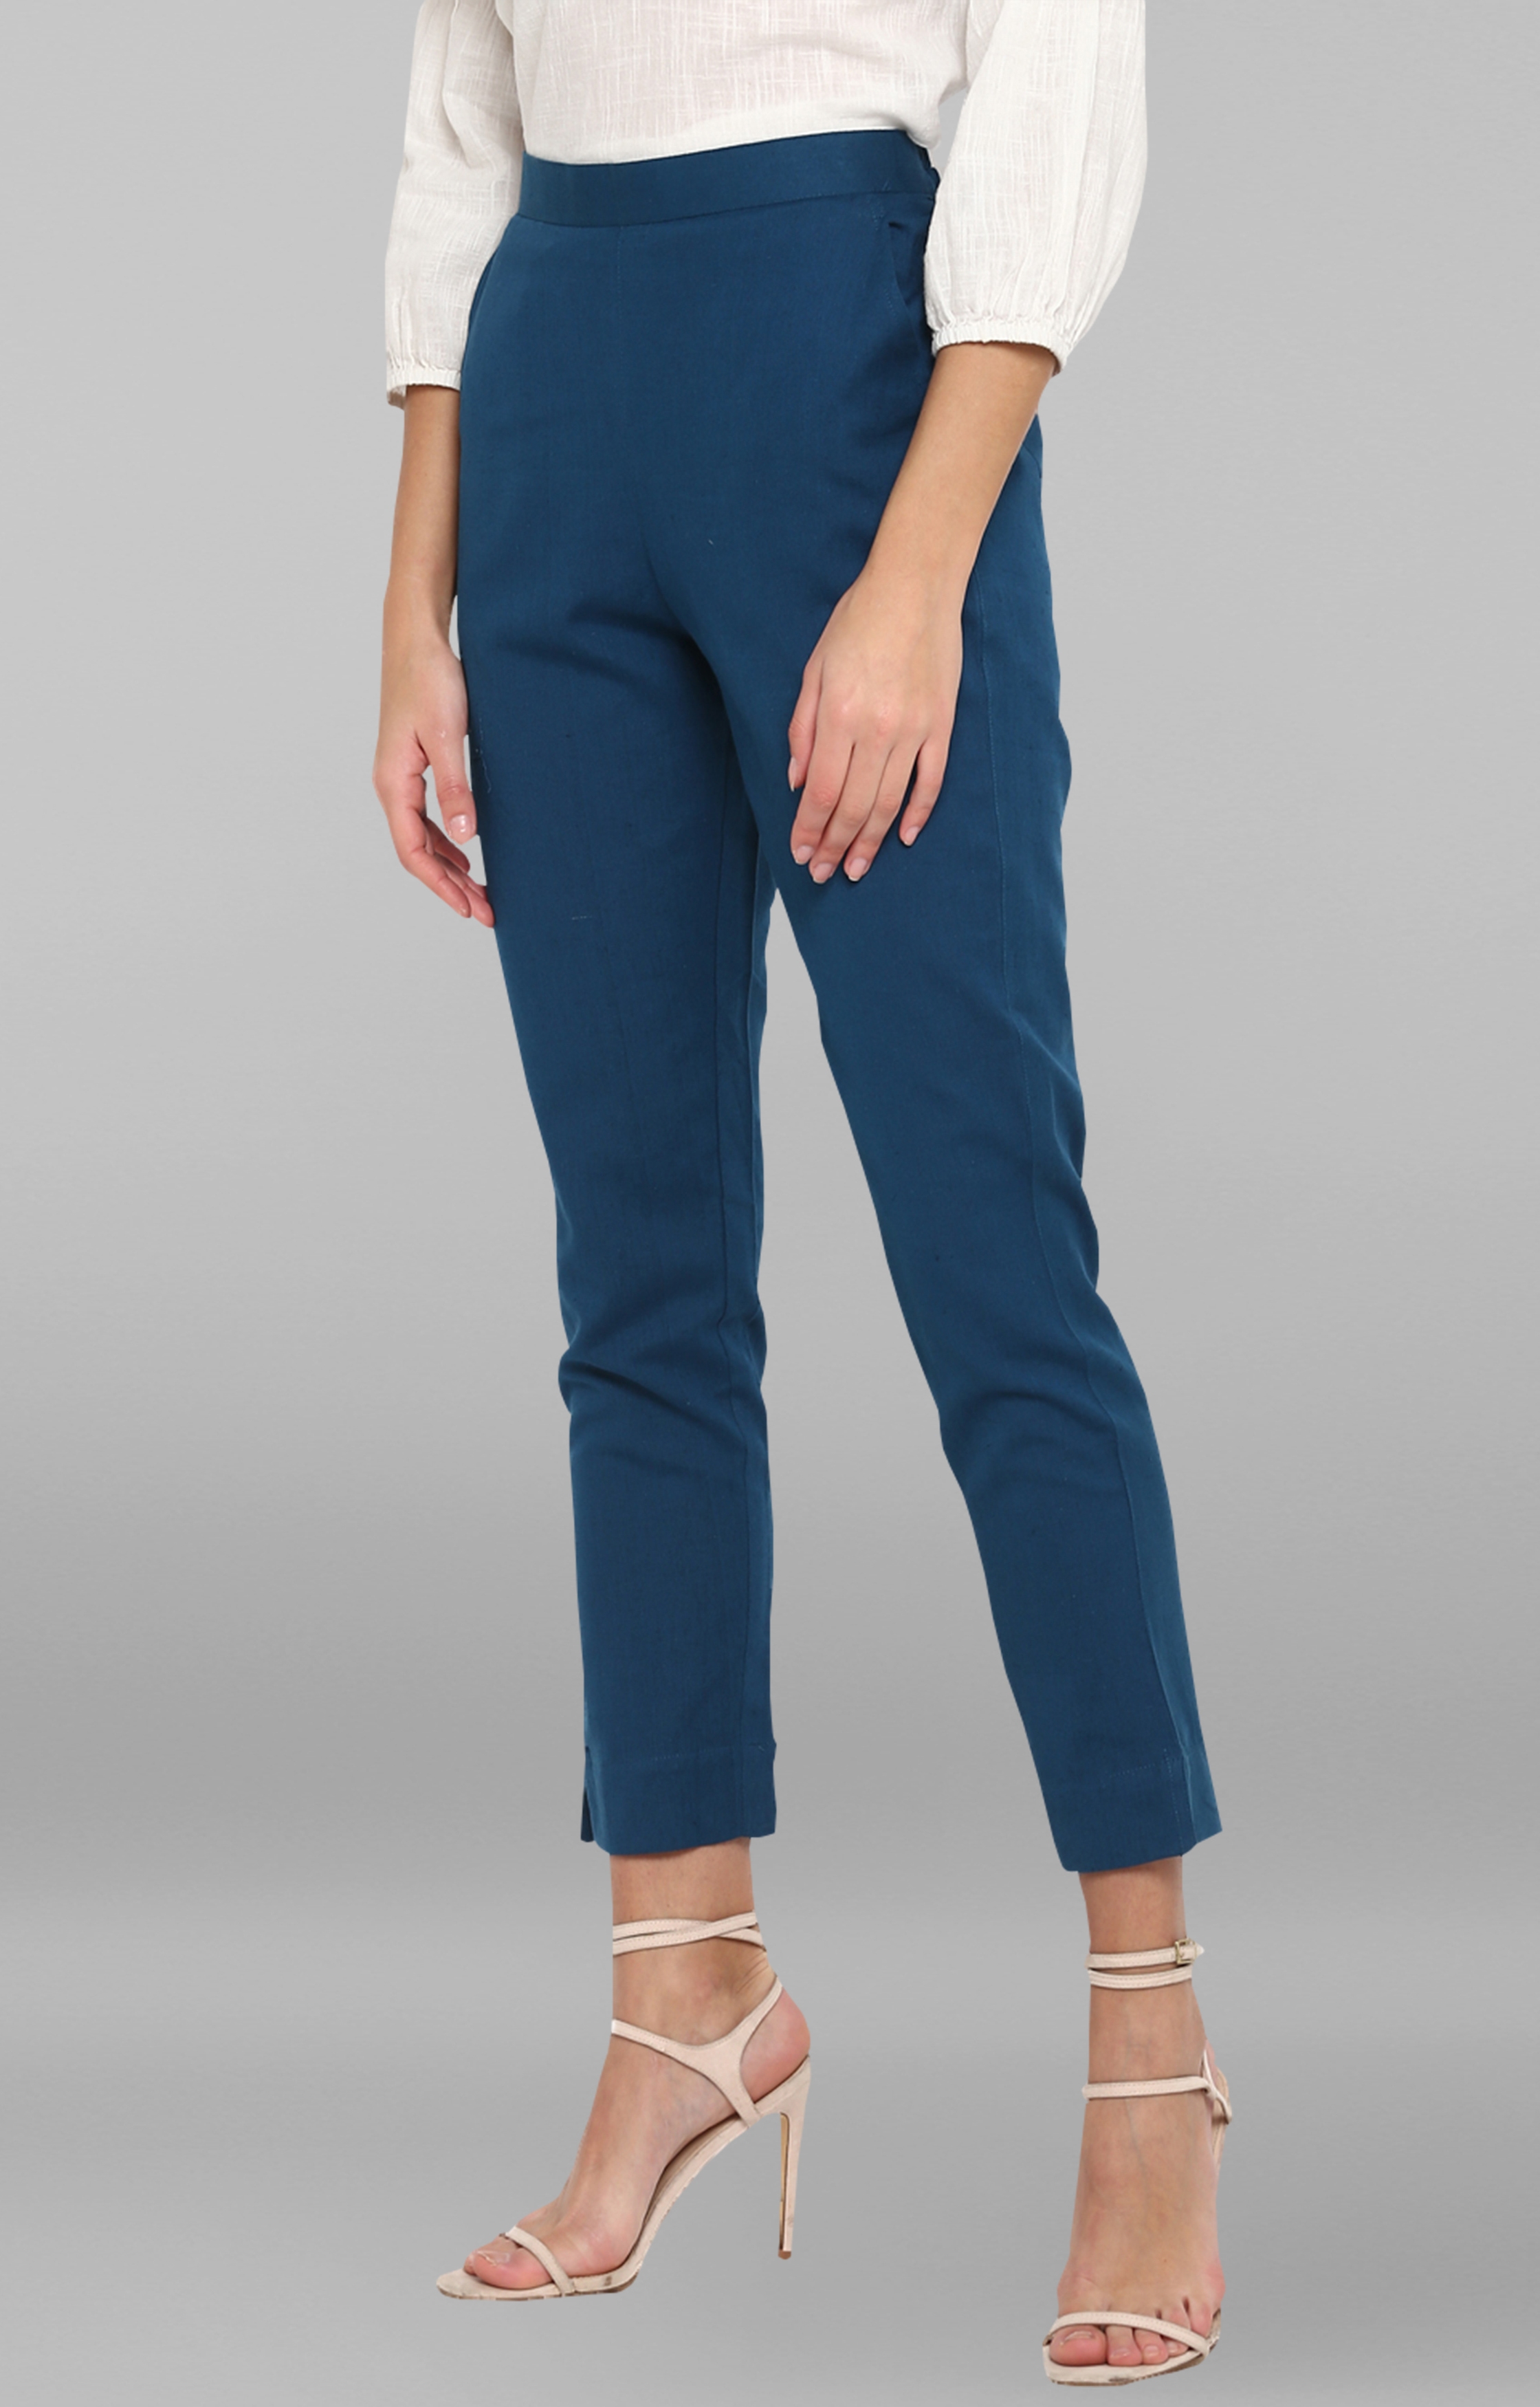 Janasya | Janasya Women's Turquoise Blue Solid Pure Cotton Narrow Pant 2